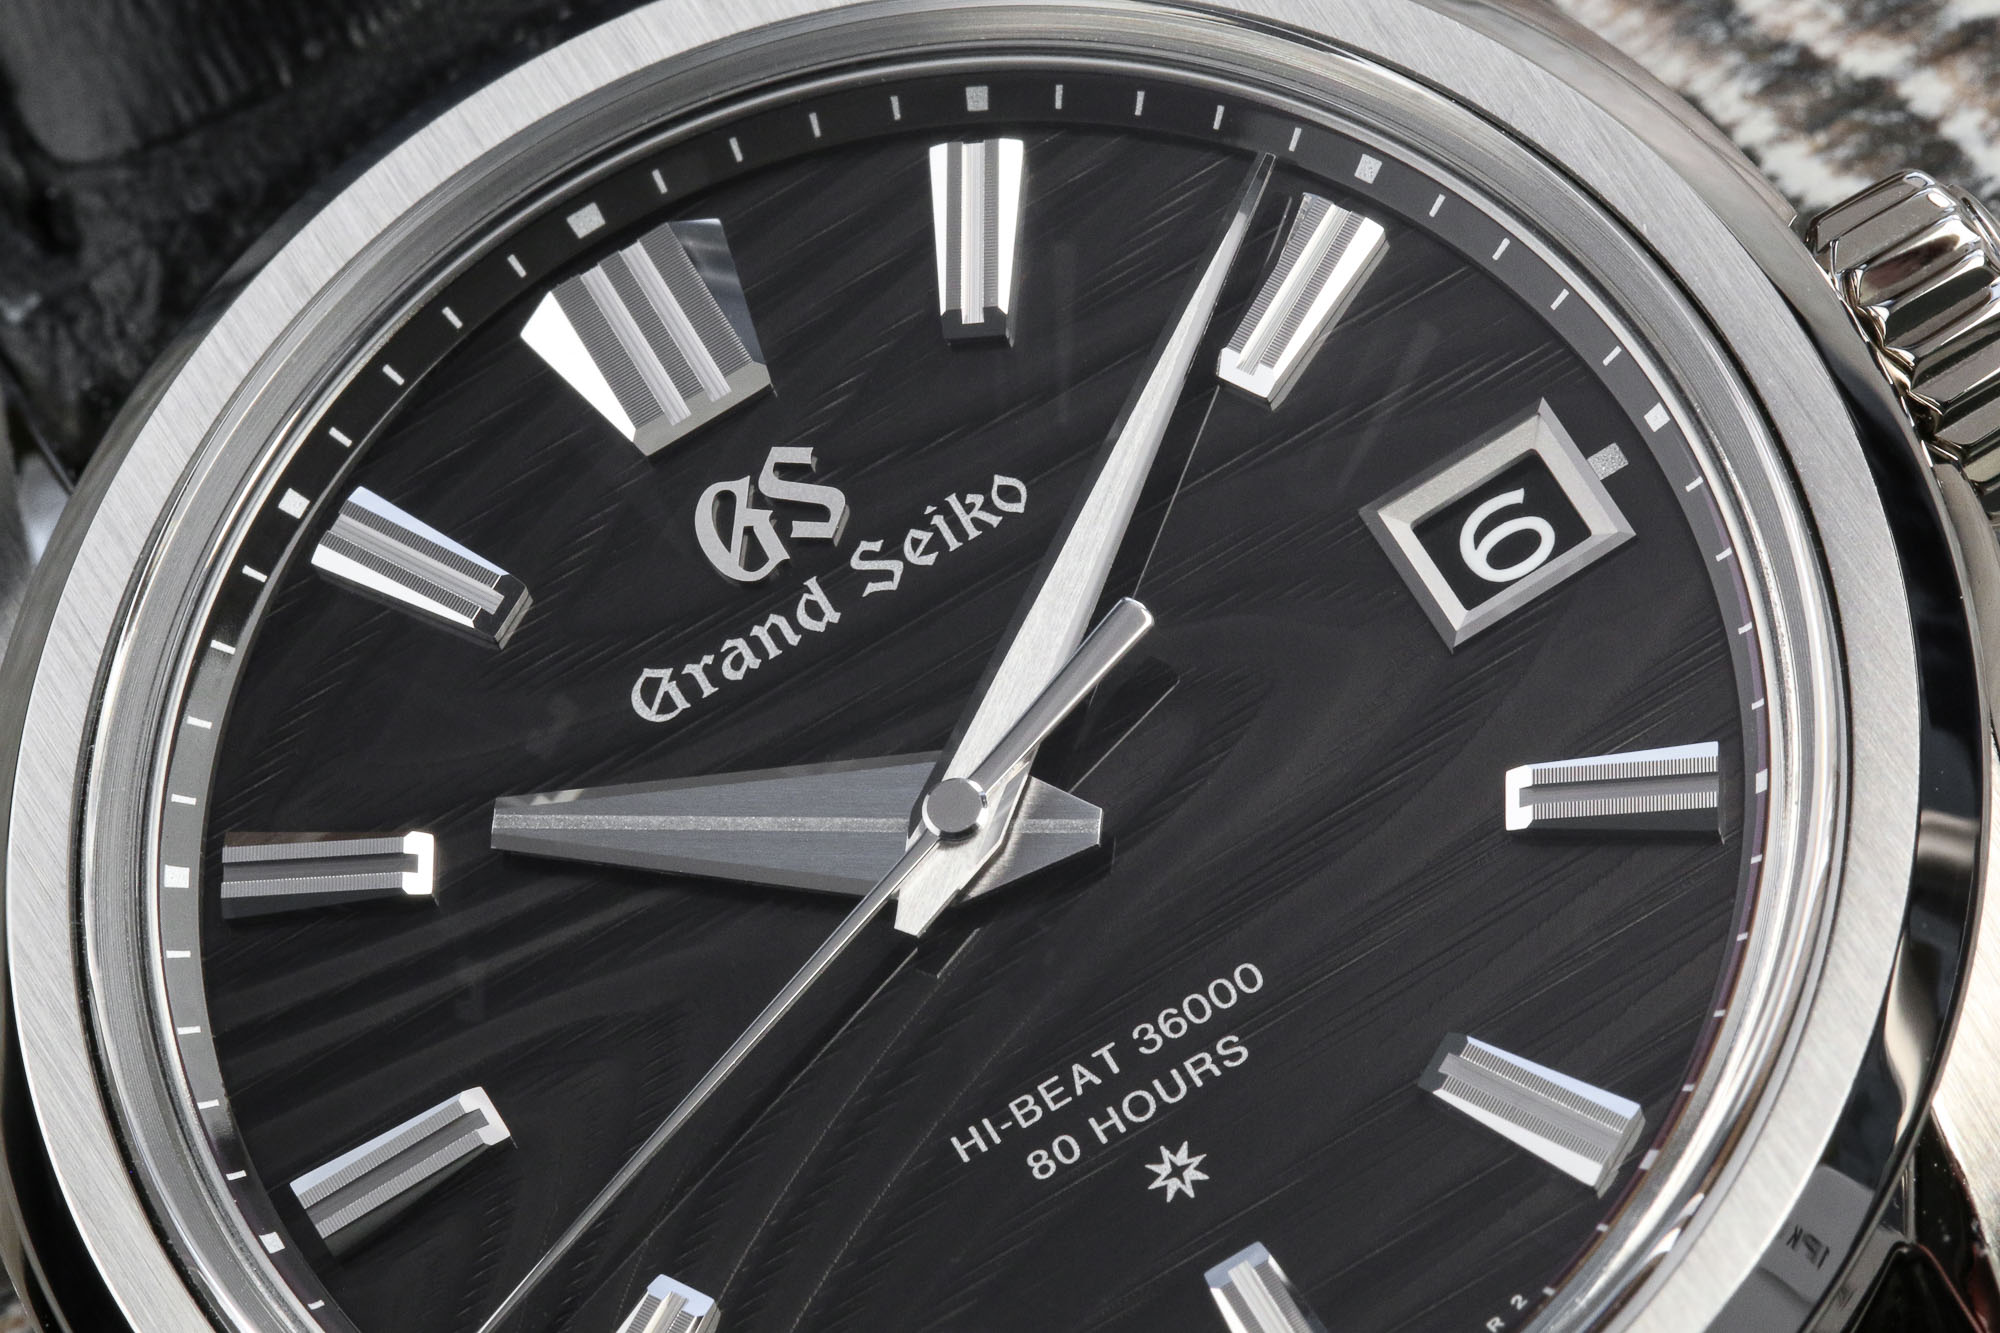 Grand Seiko SLGH007 dark dial stainless steel wristwatch.